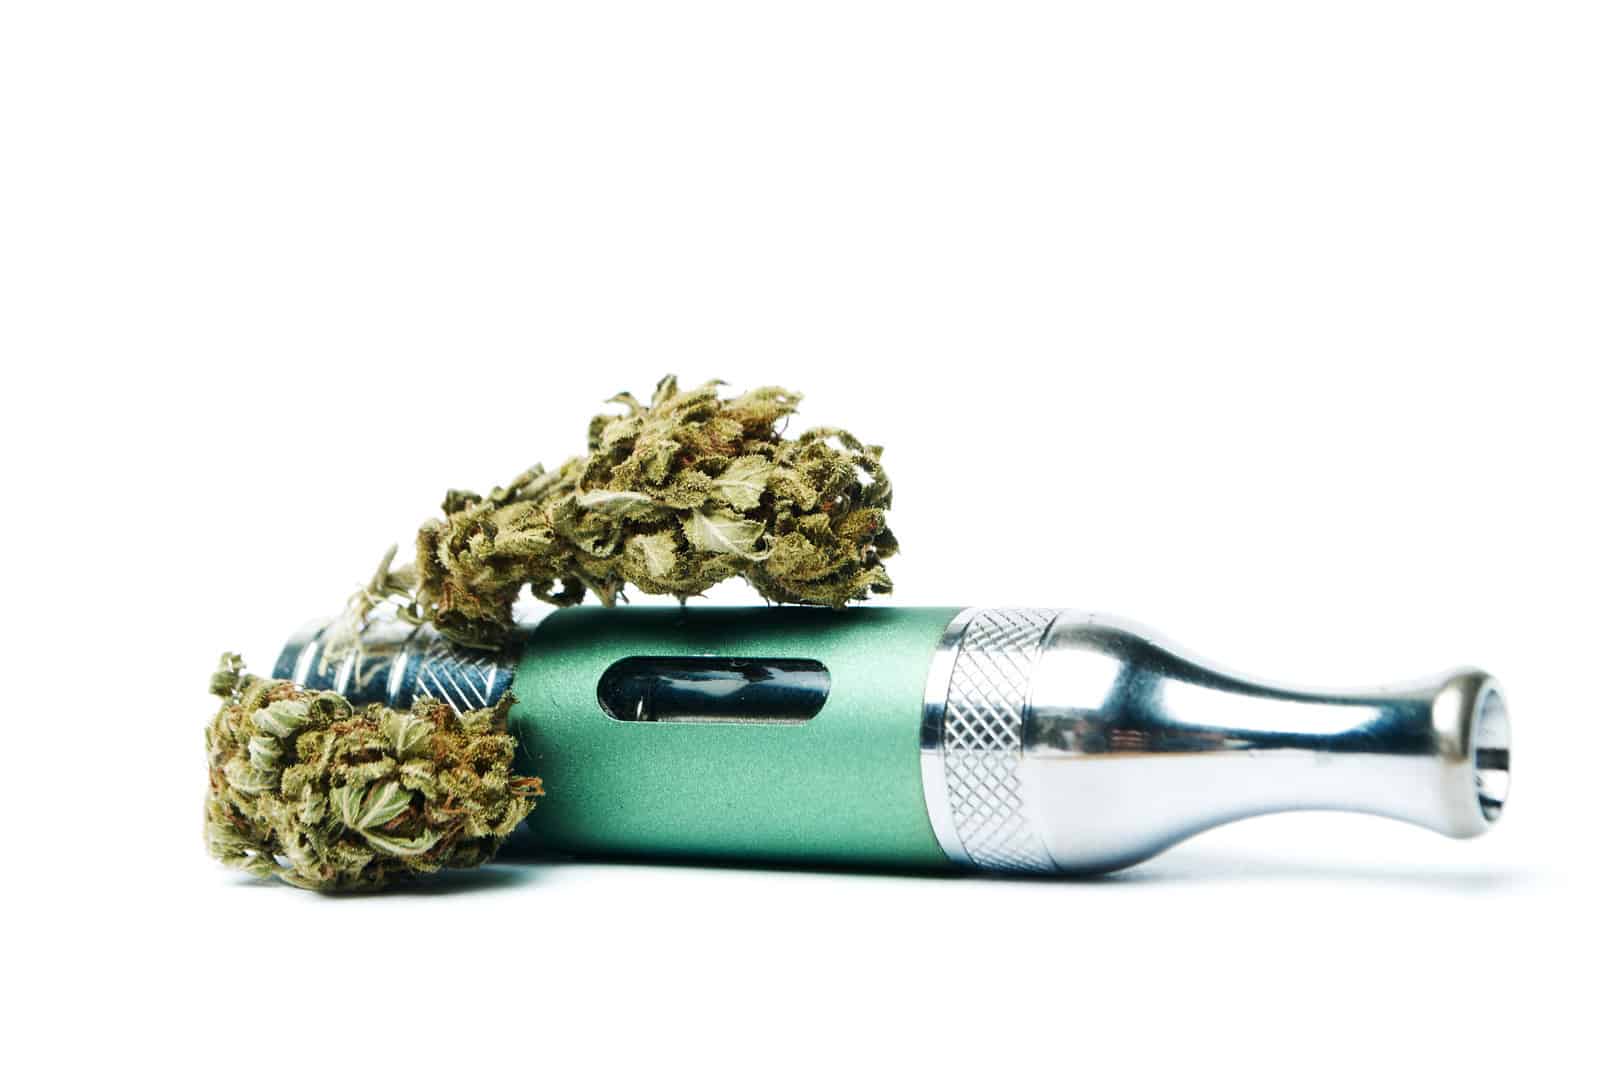 Healthier Methods of Cannabis Consumption